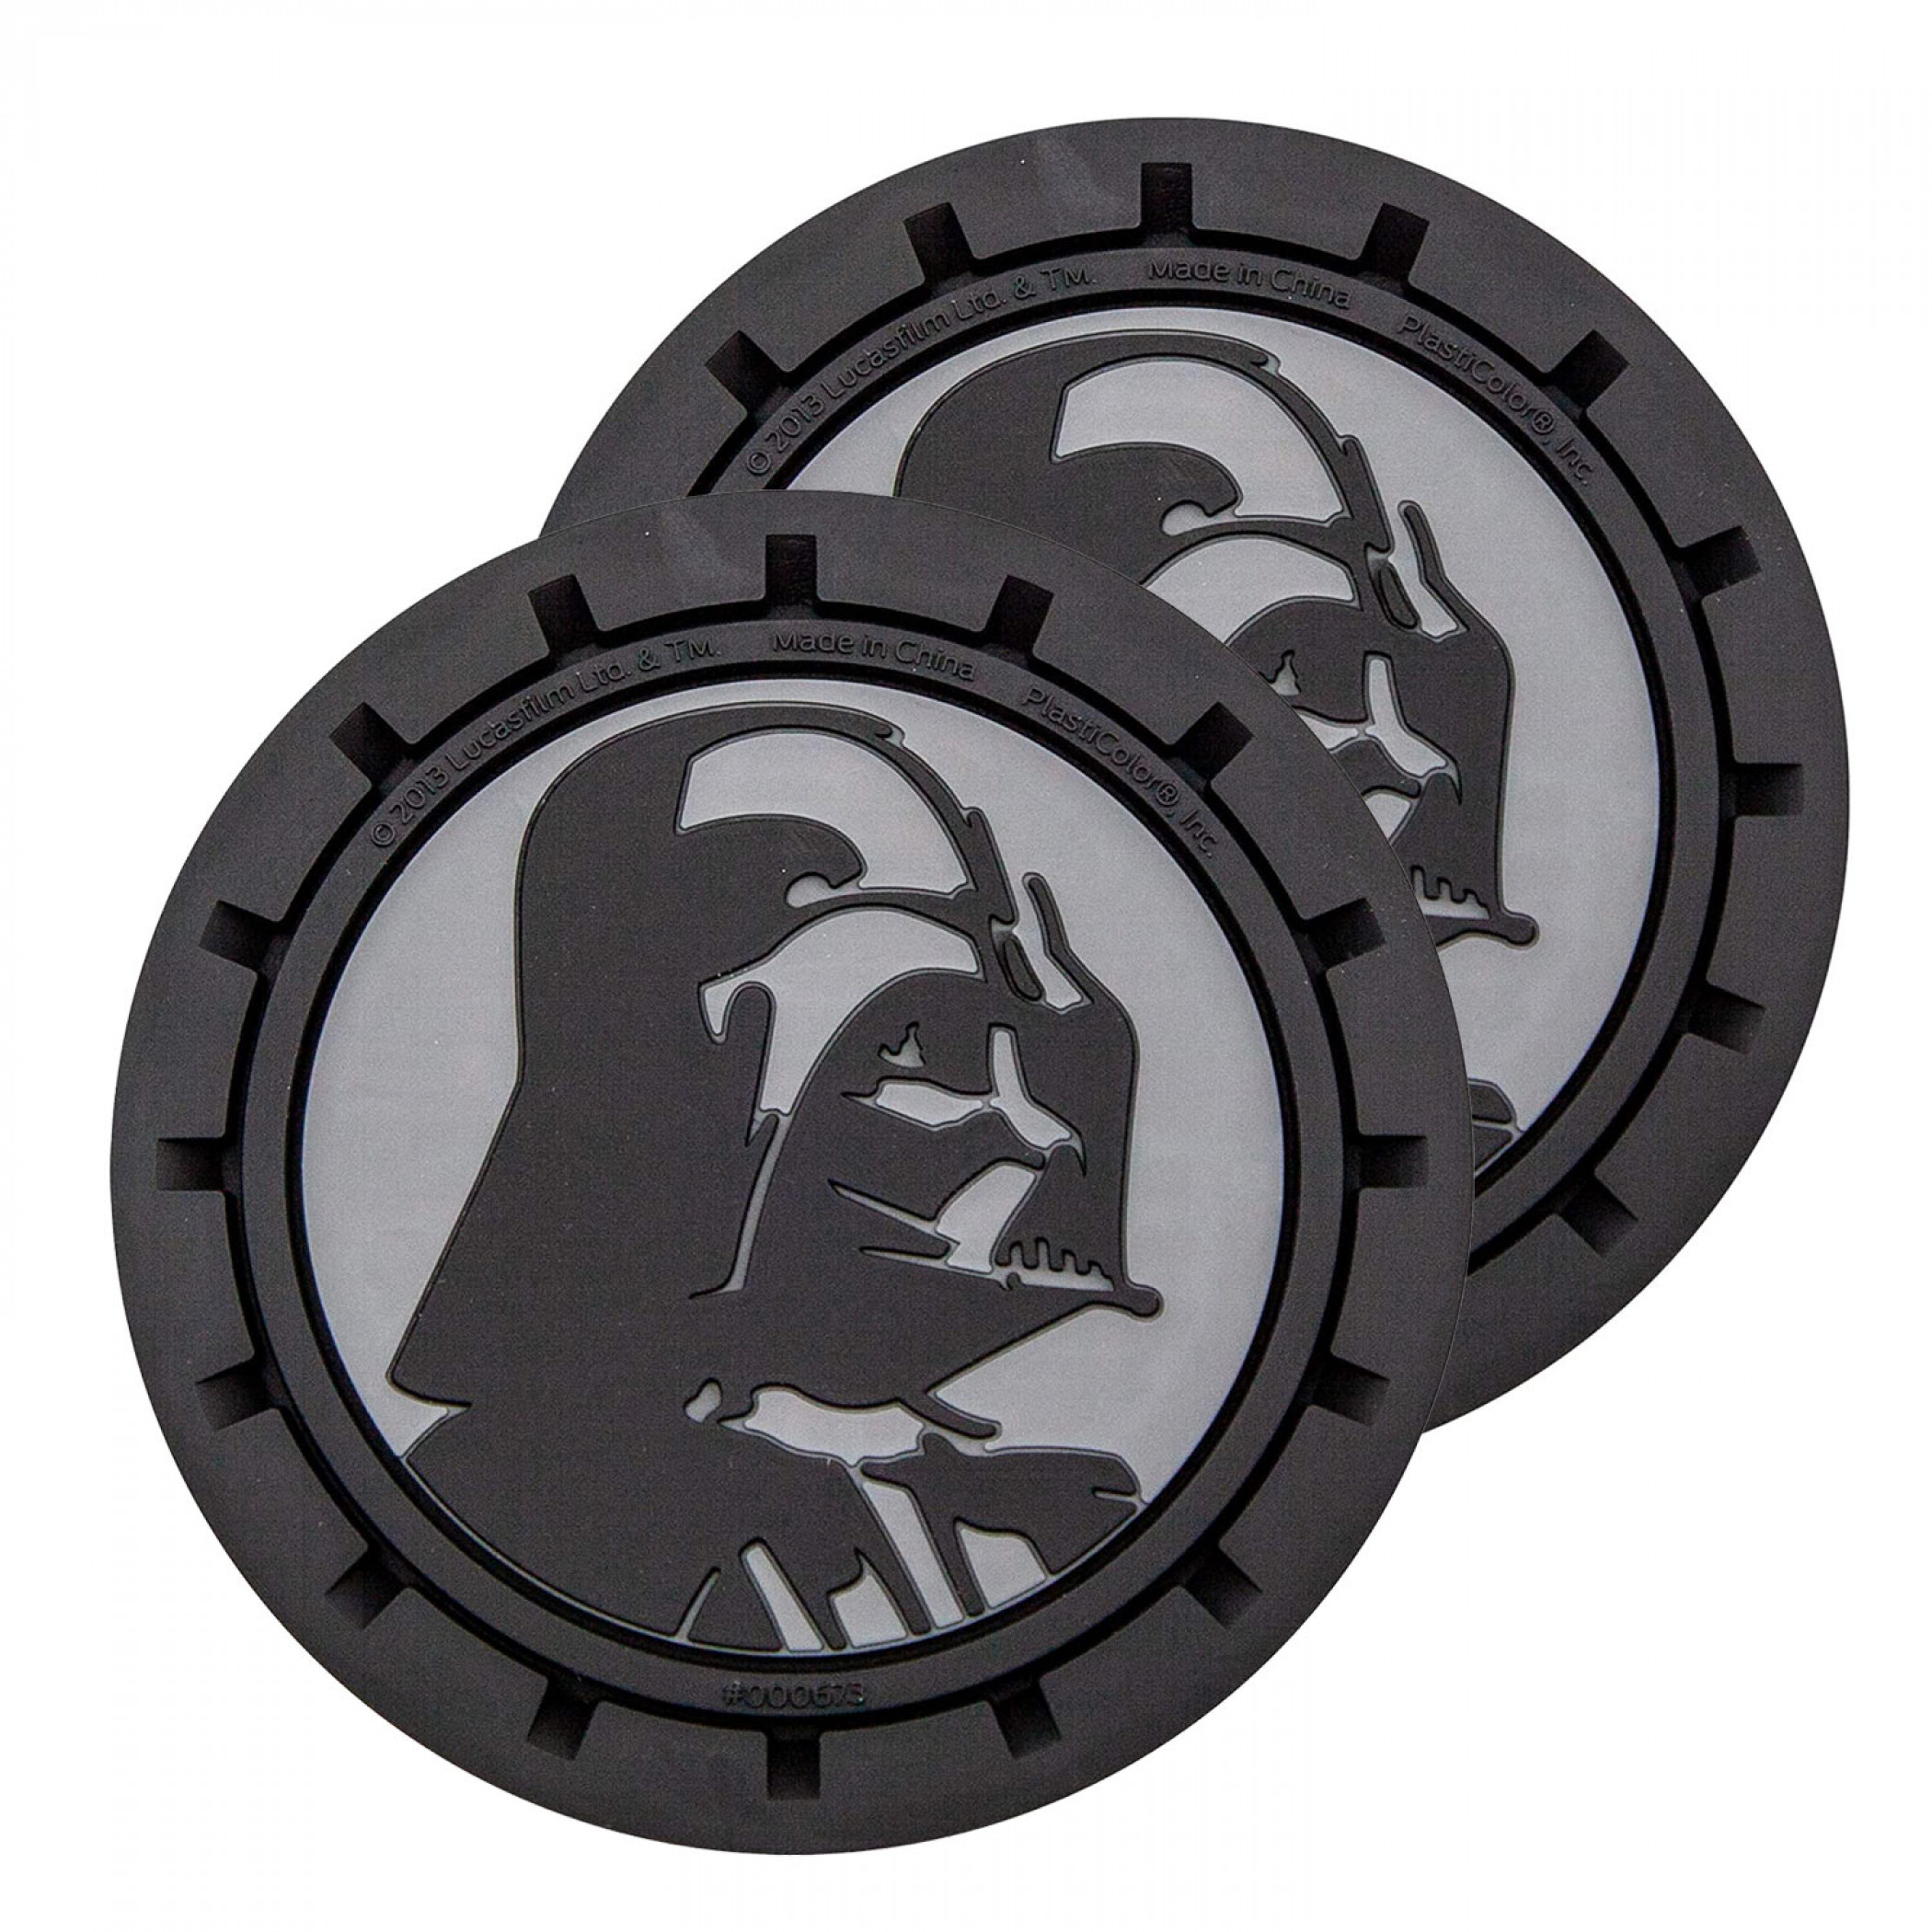 Star Wars Darth Vader Car Cup Holder Coaster 2-Pack